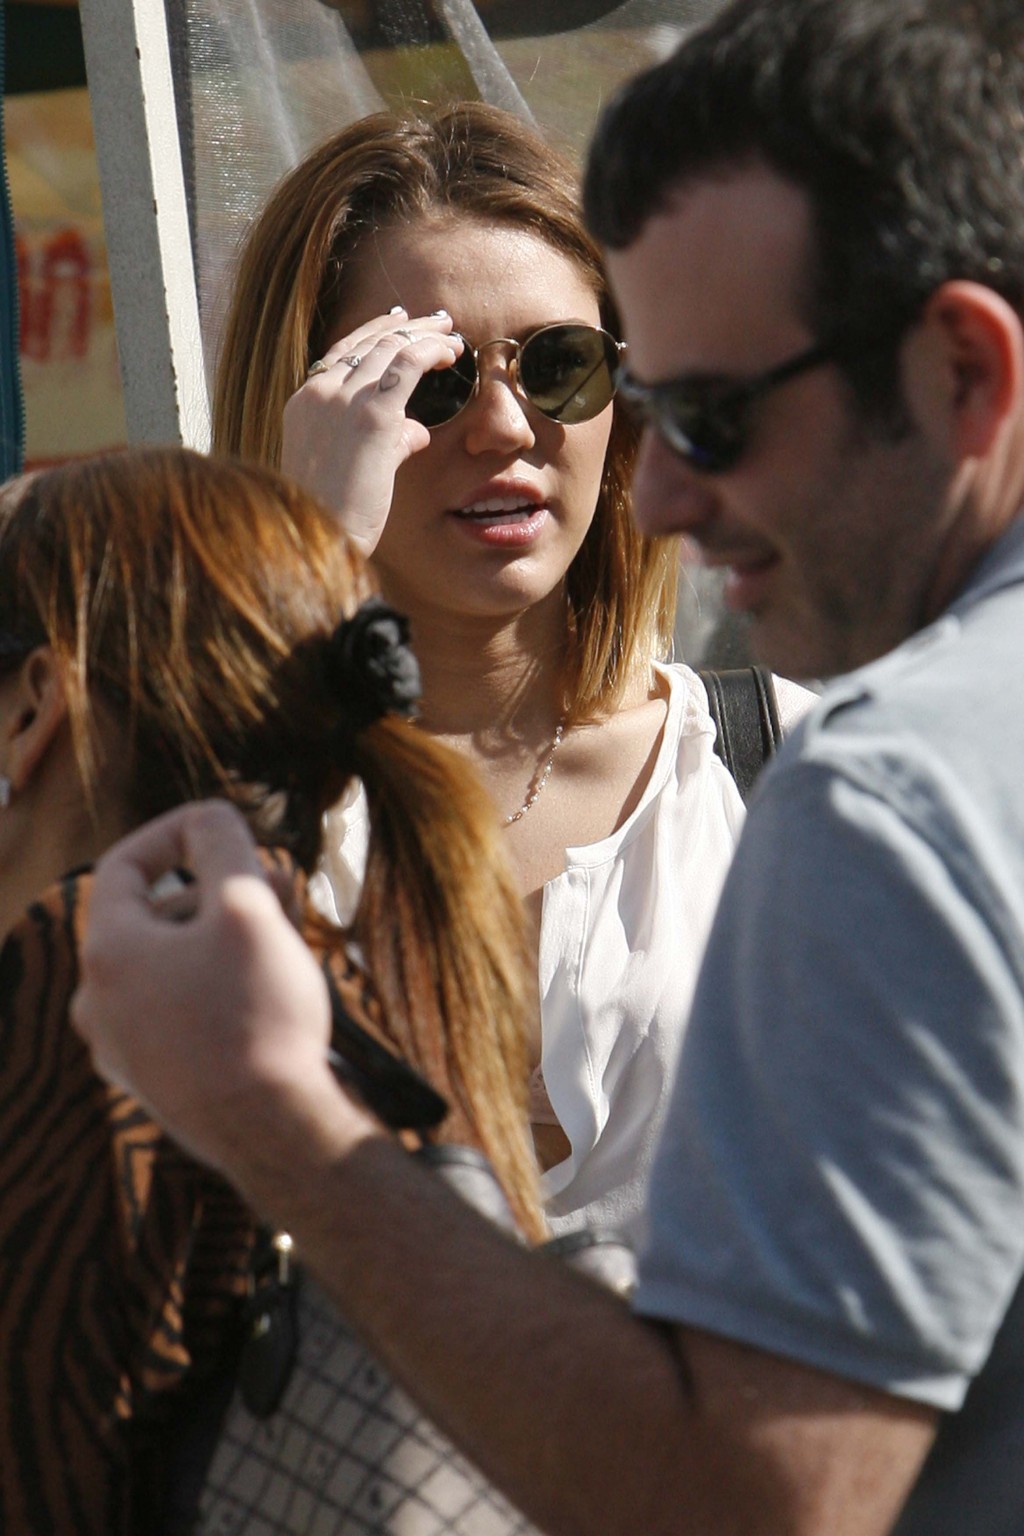 Miley Cyrus bra peak while shopping at the farmer's market in LA #75274069